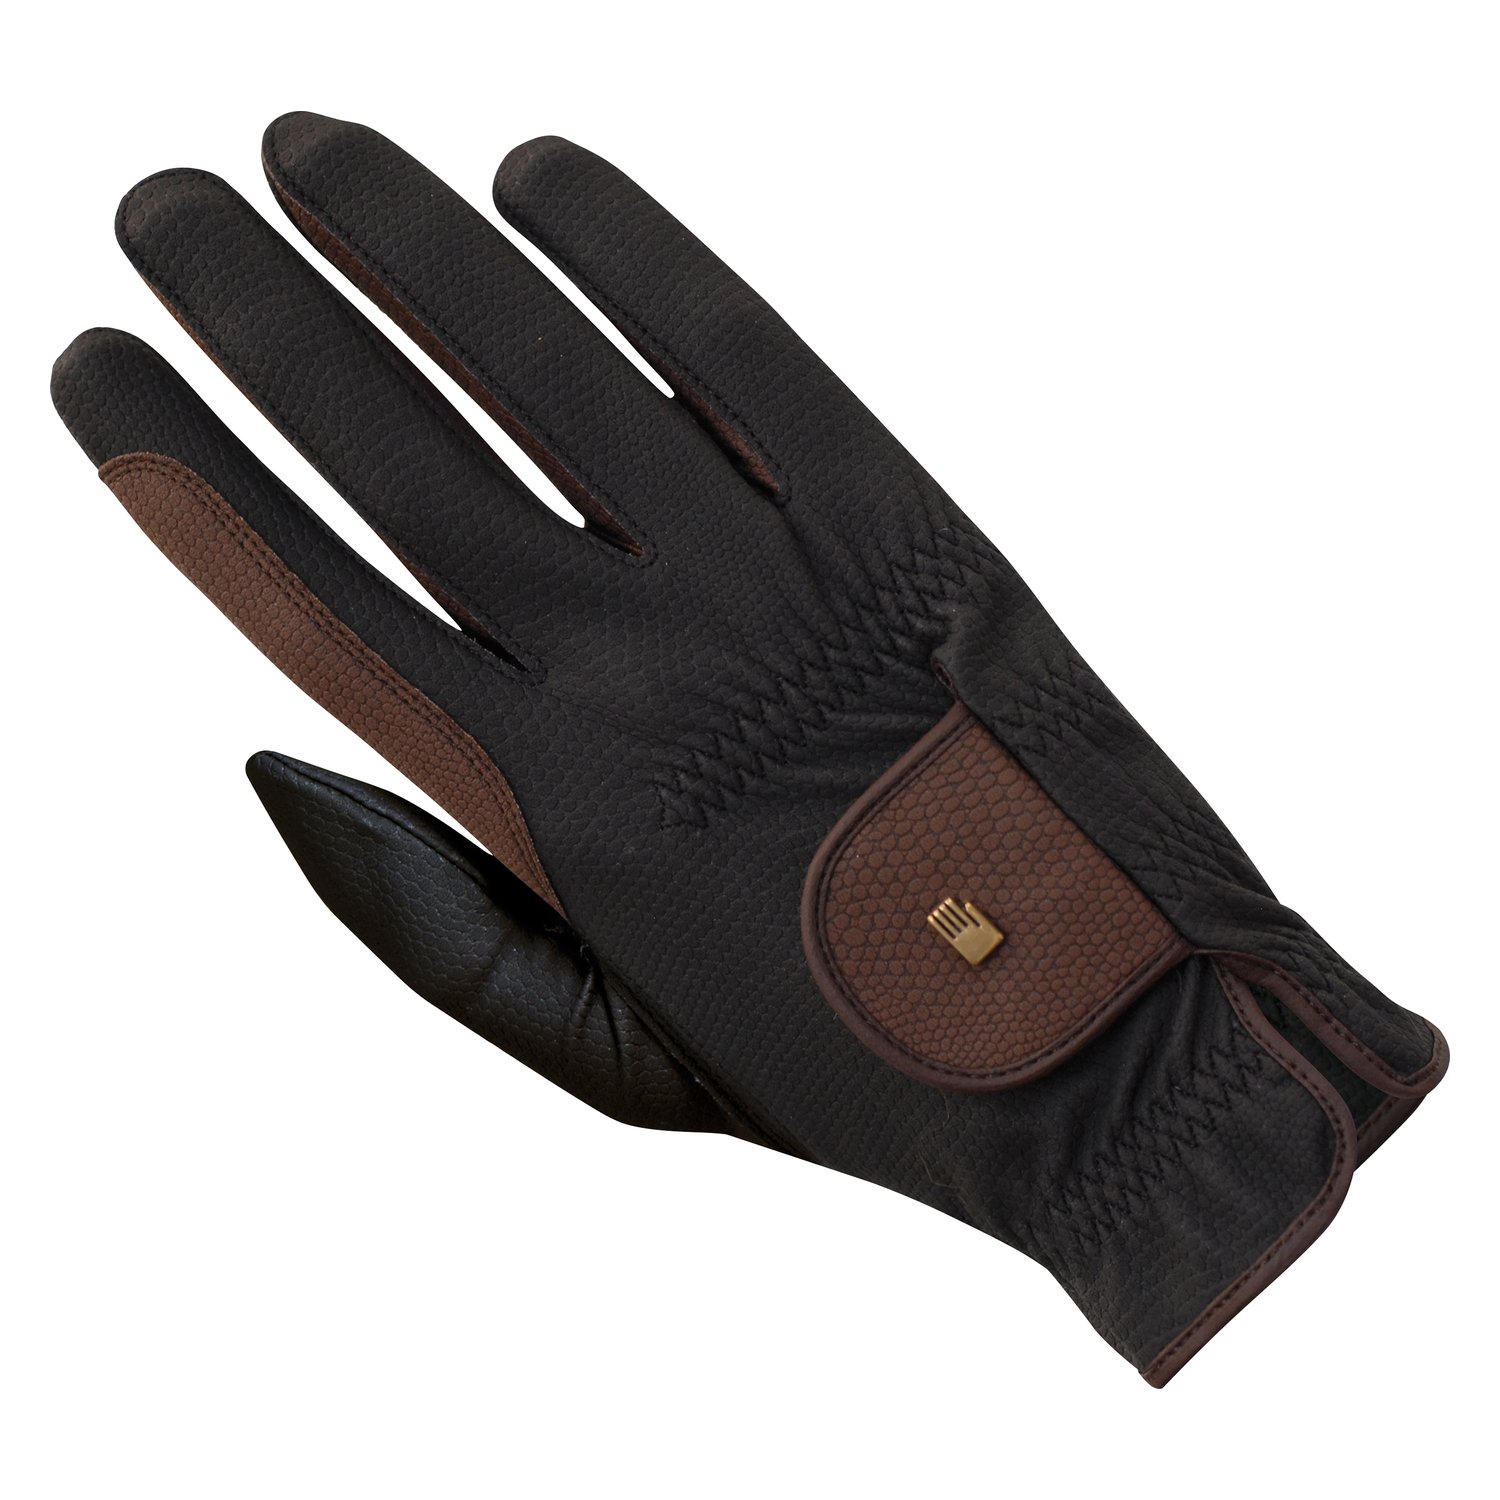 Roeckl Handschuhe Malta Winter schwarz/mokka | 6,5